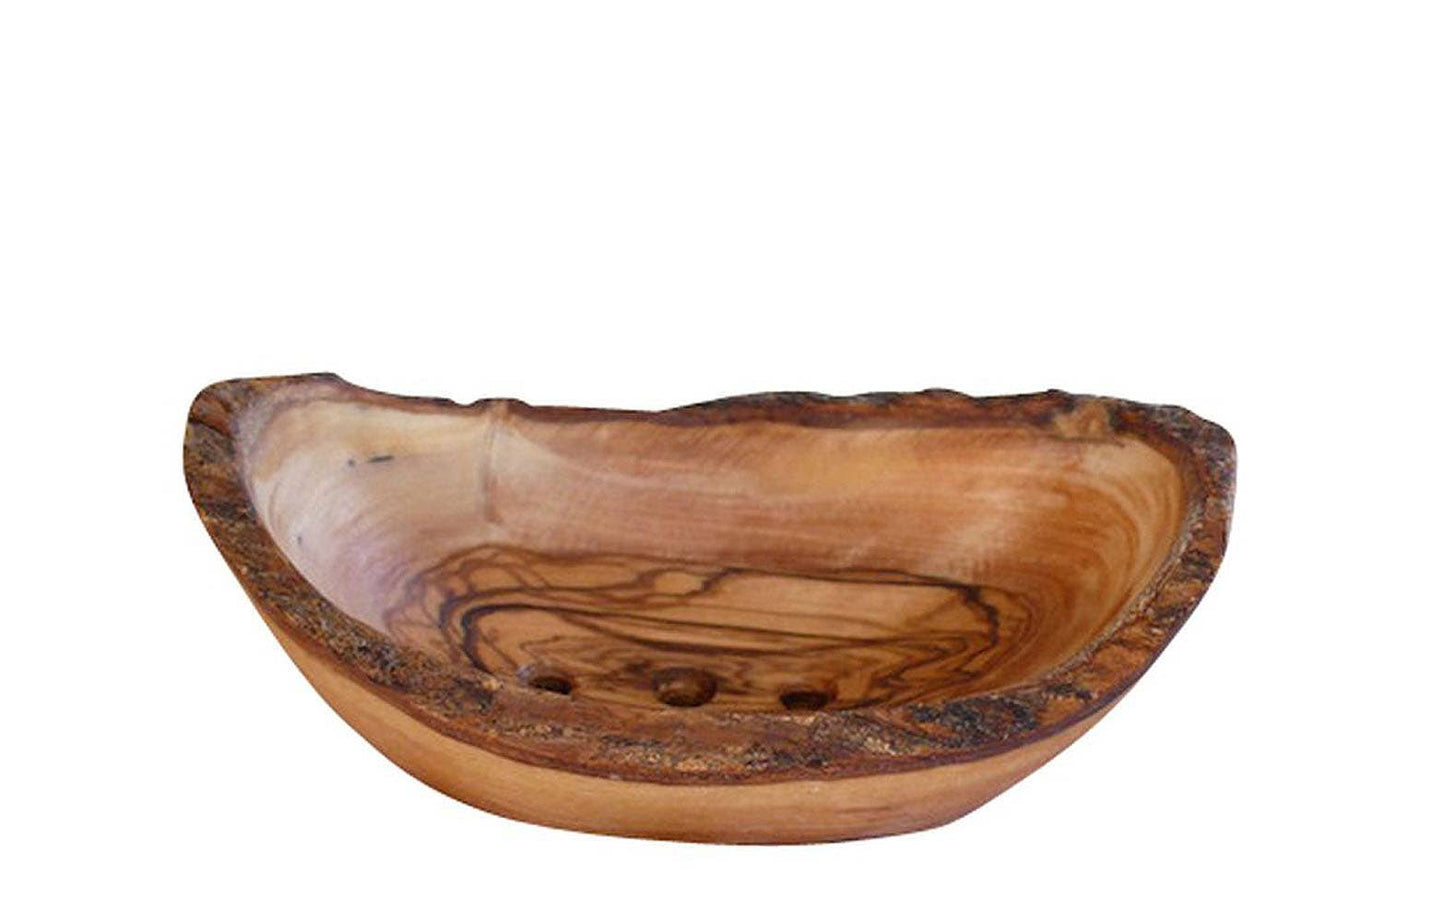 Wooden Soap Dish - Bowl